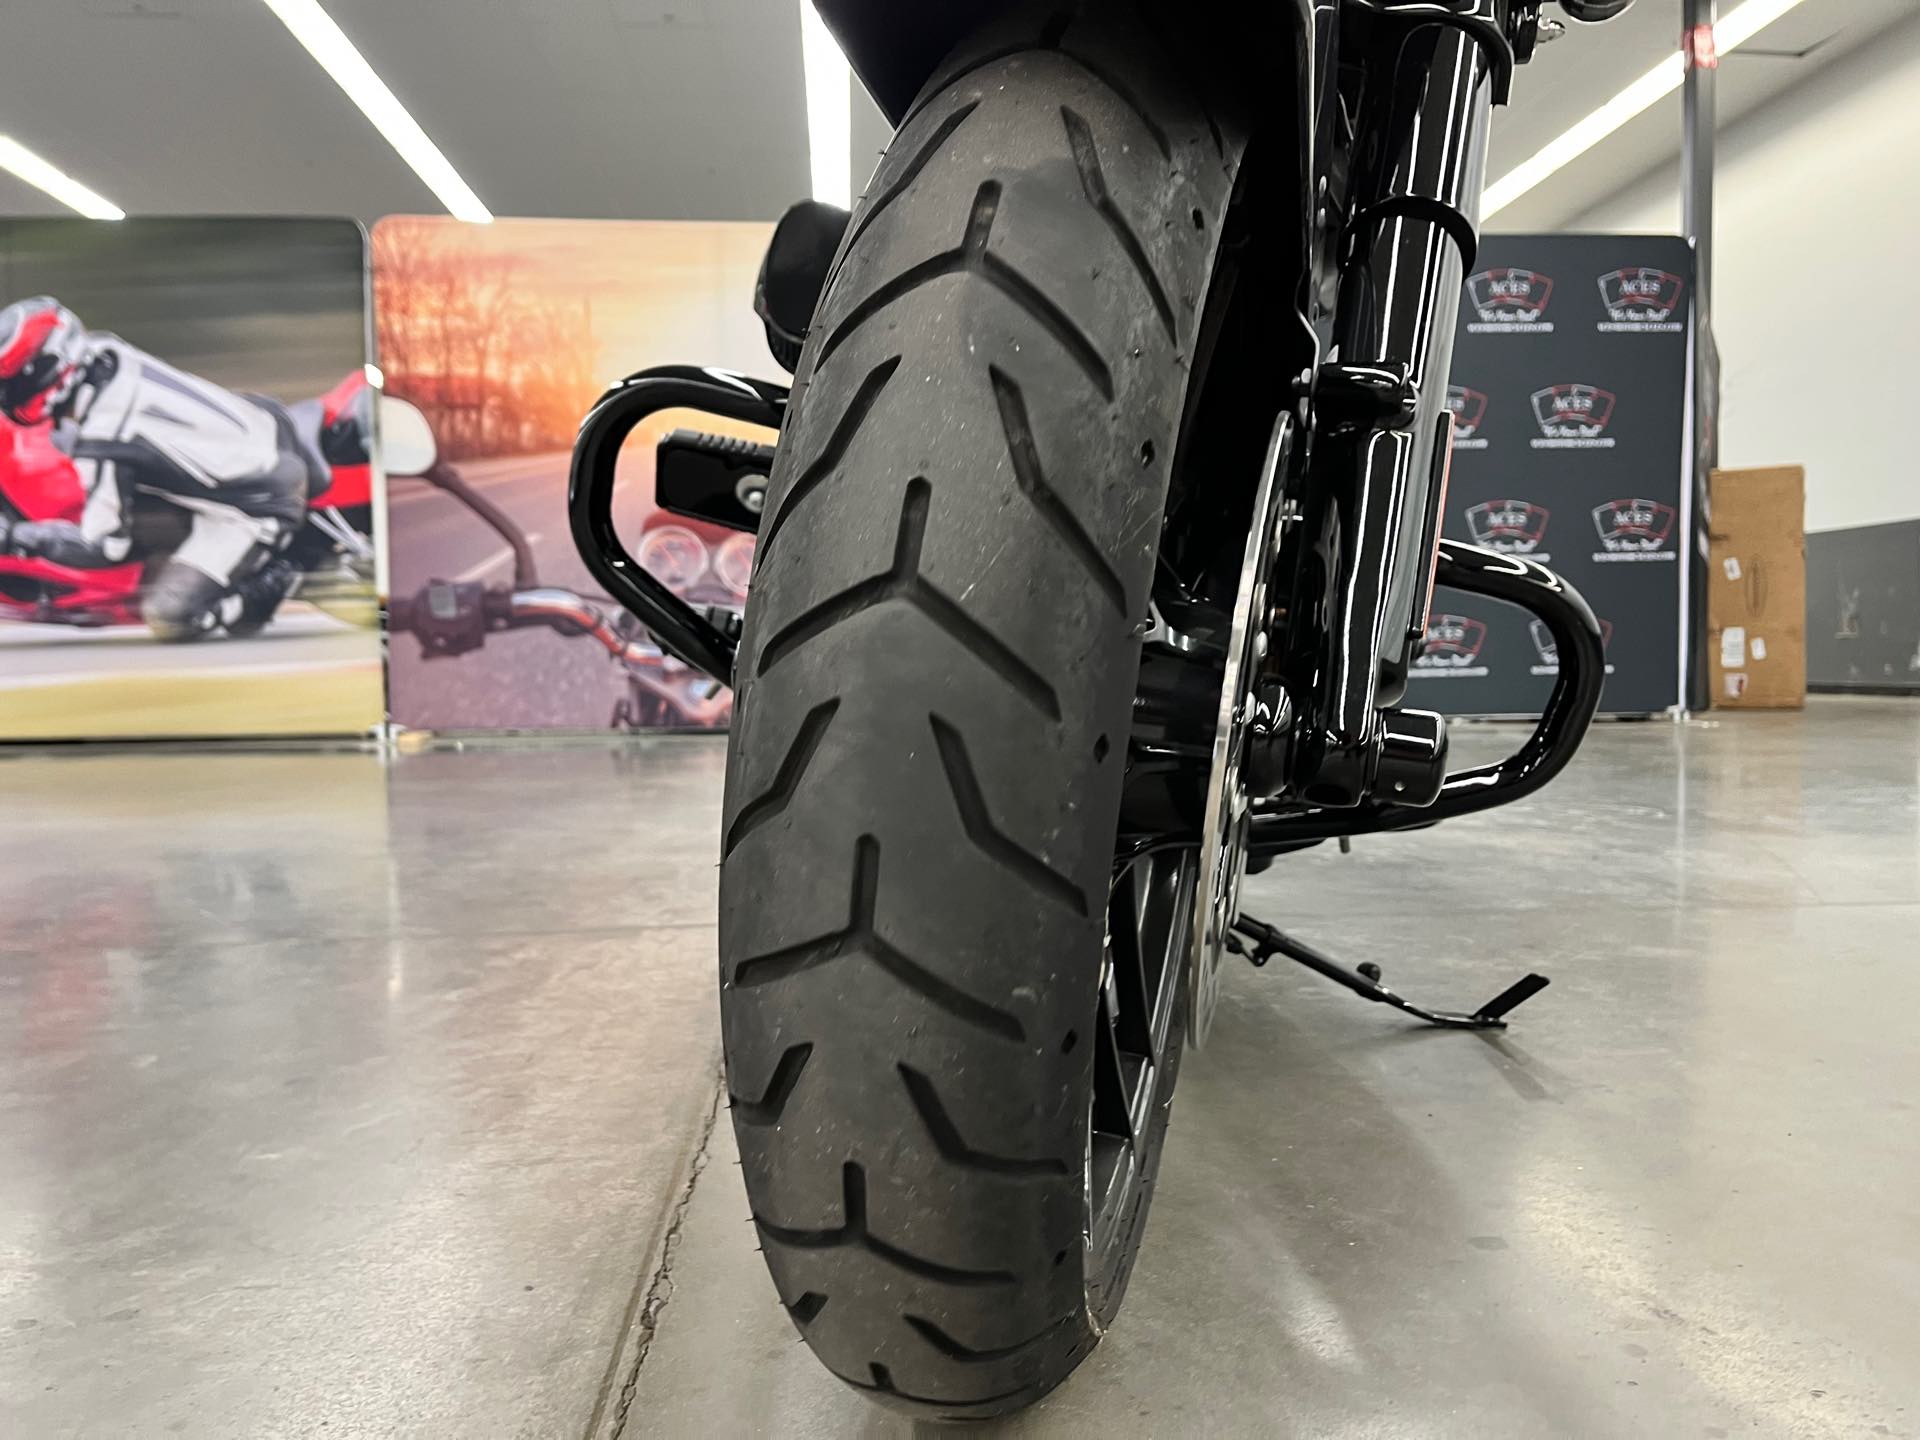 2020 Harley-Davidson CVO CVO Street Glide at Aces Motorcycles - Denver